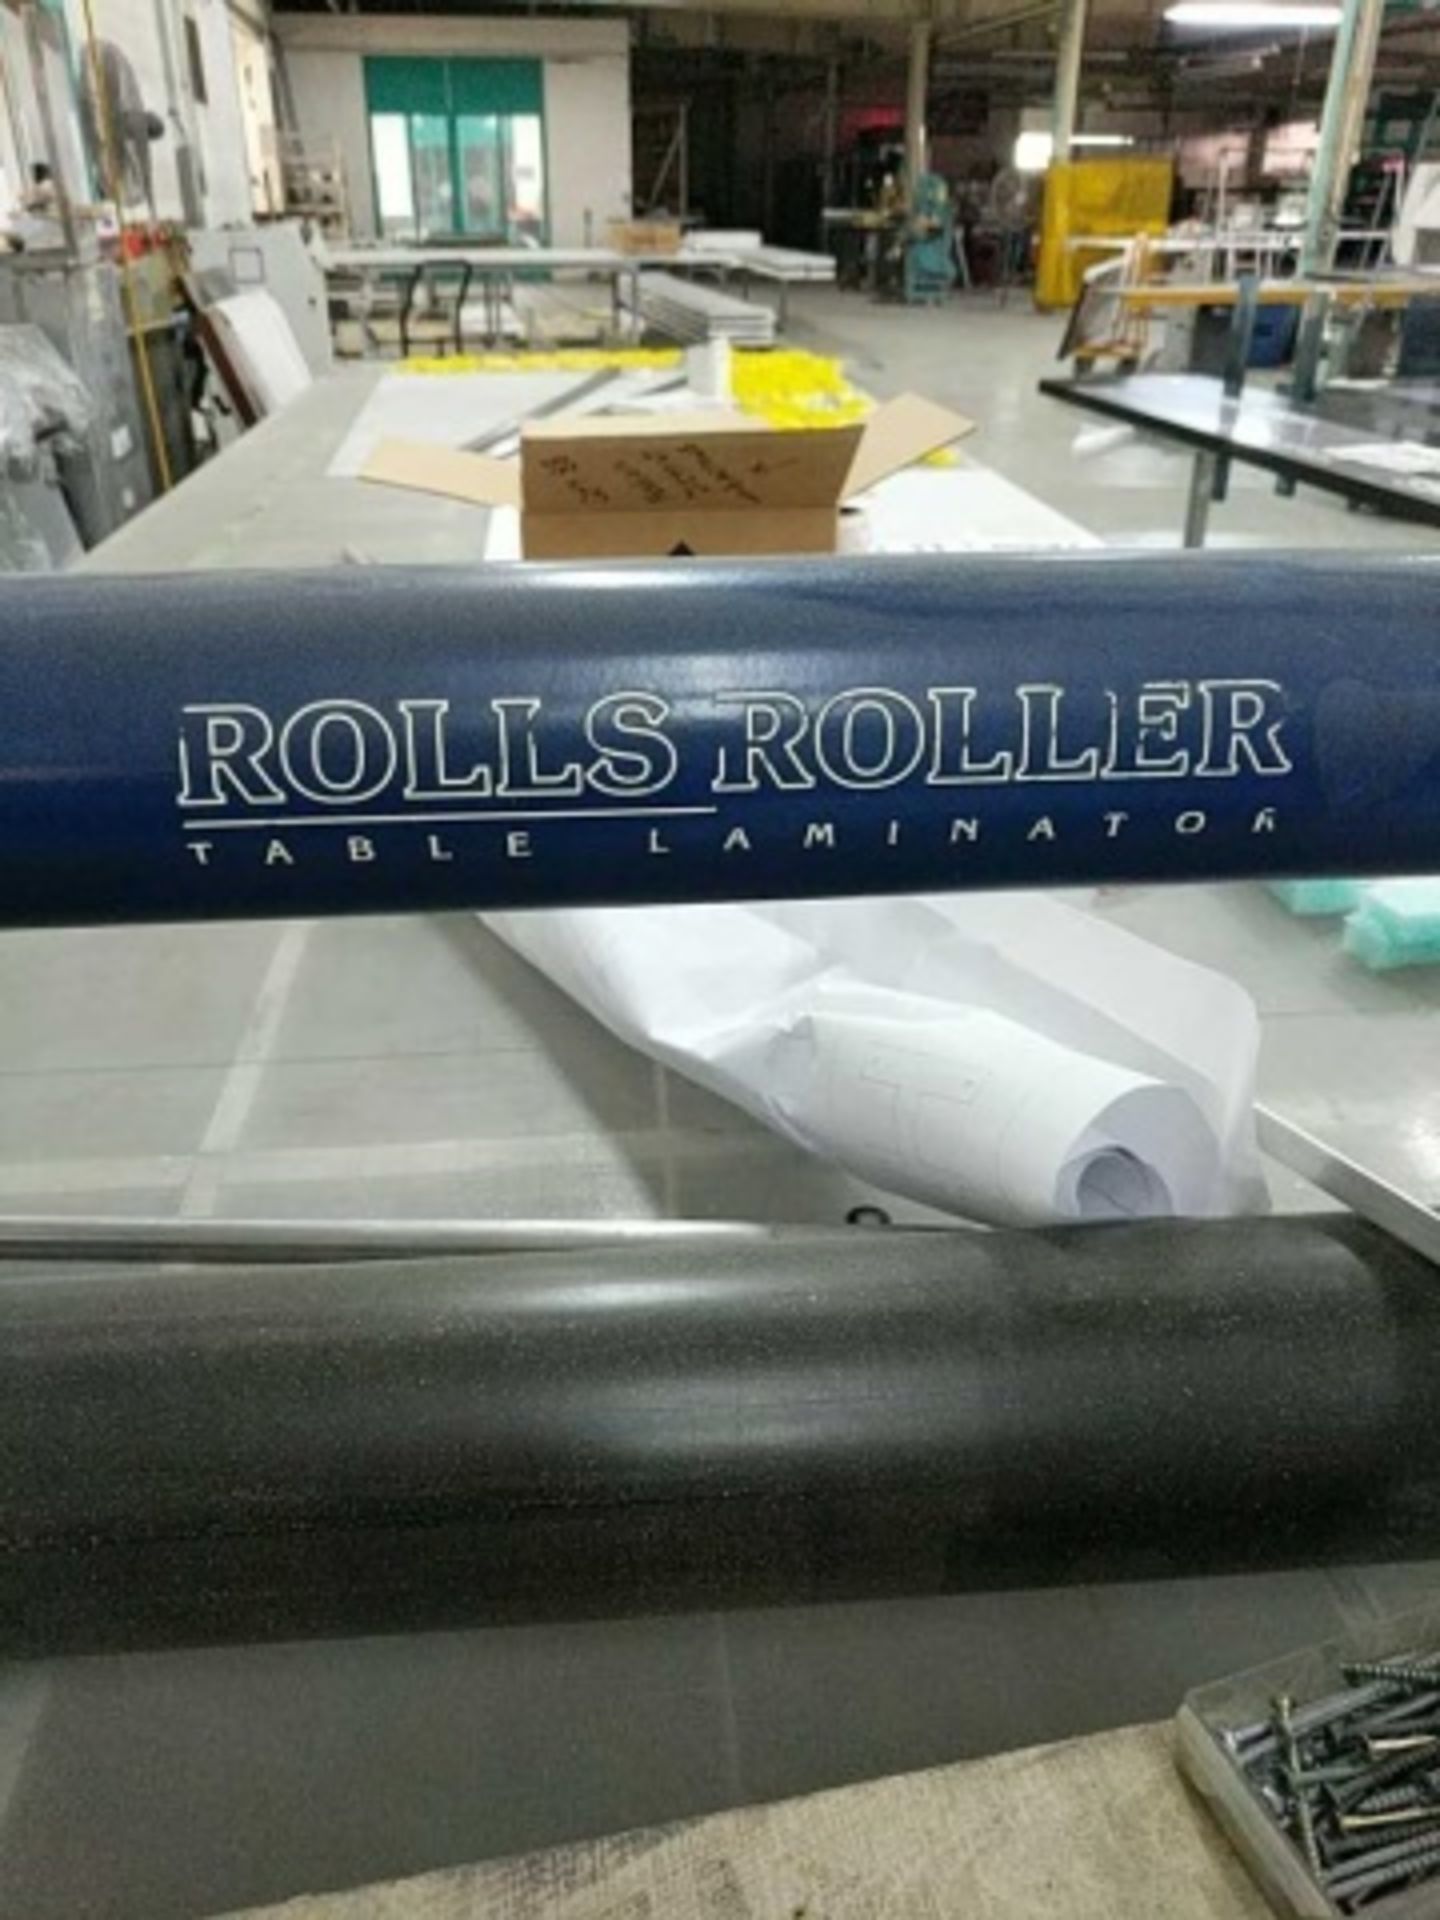 Rollsroller Table Laminator - Image 2 of 4